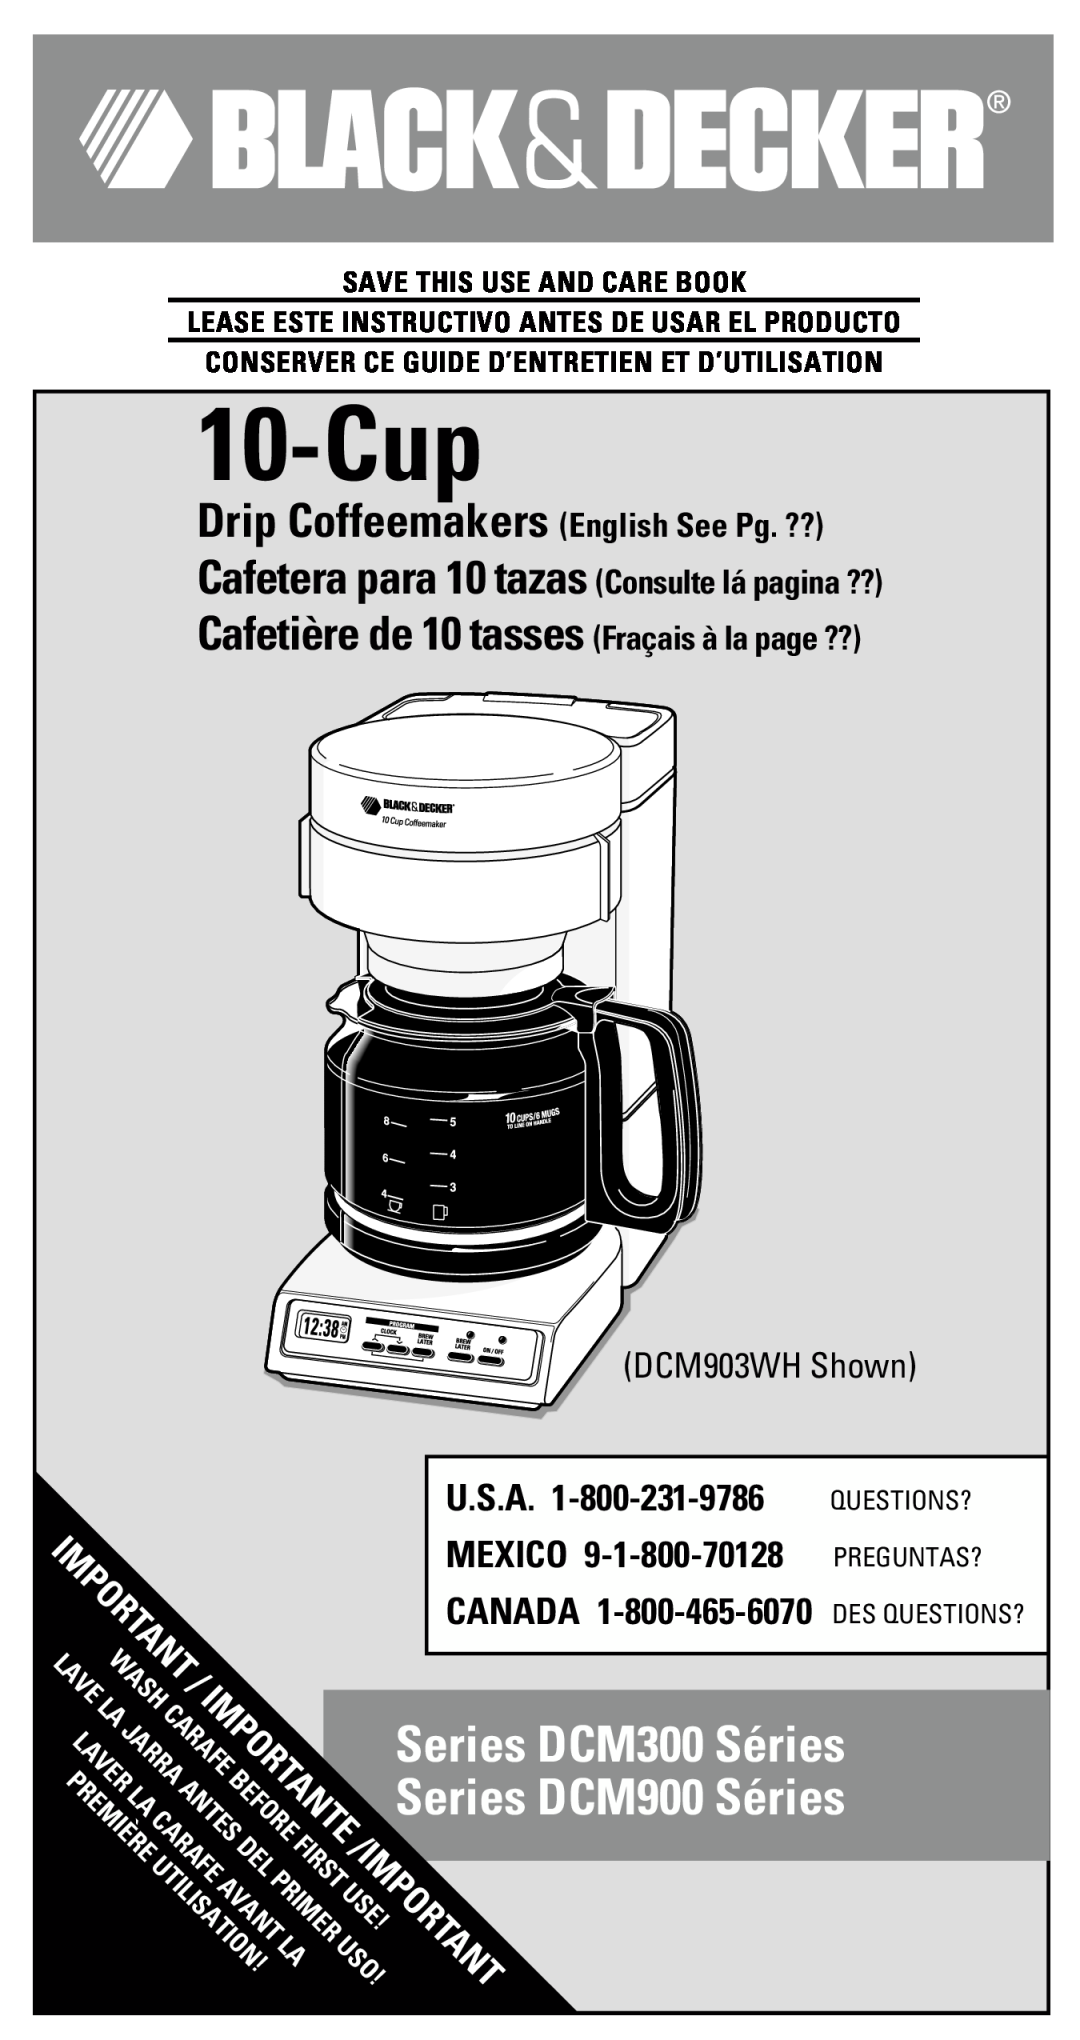 Black & Decker DCM300 Sries manual 10-Cup, Uso!/Important, Series DCM300 Séries, Series DCM900 Séries, U.S.A, Jarra, Laver 